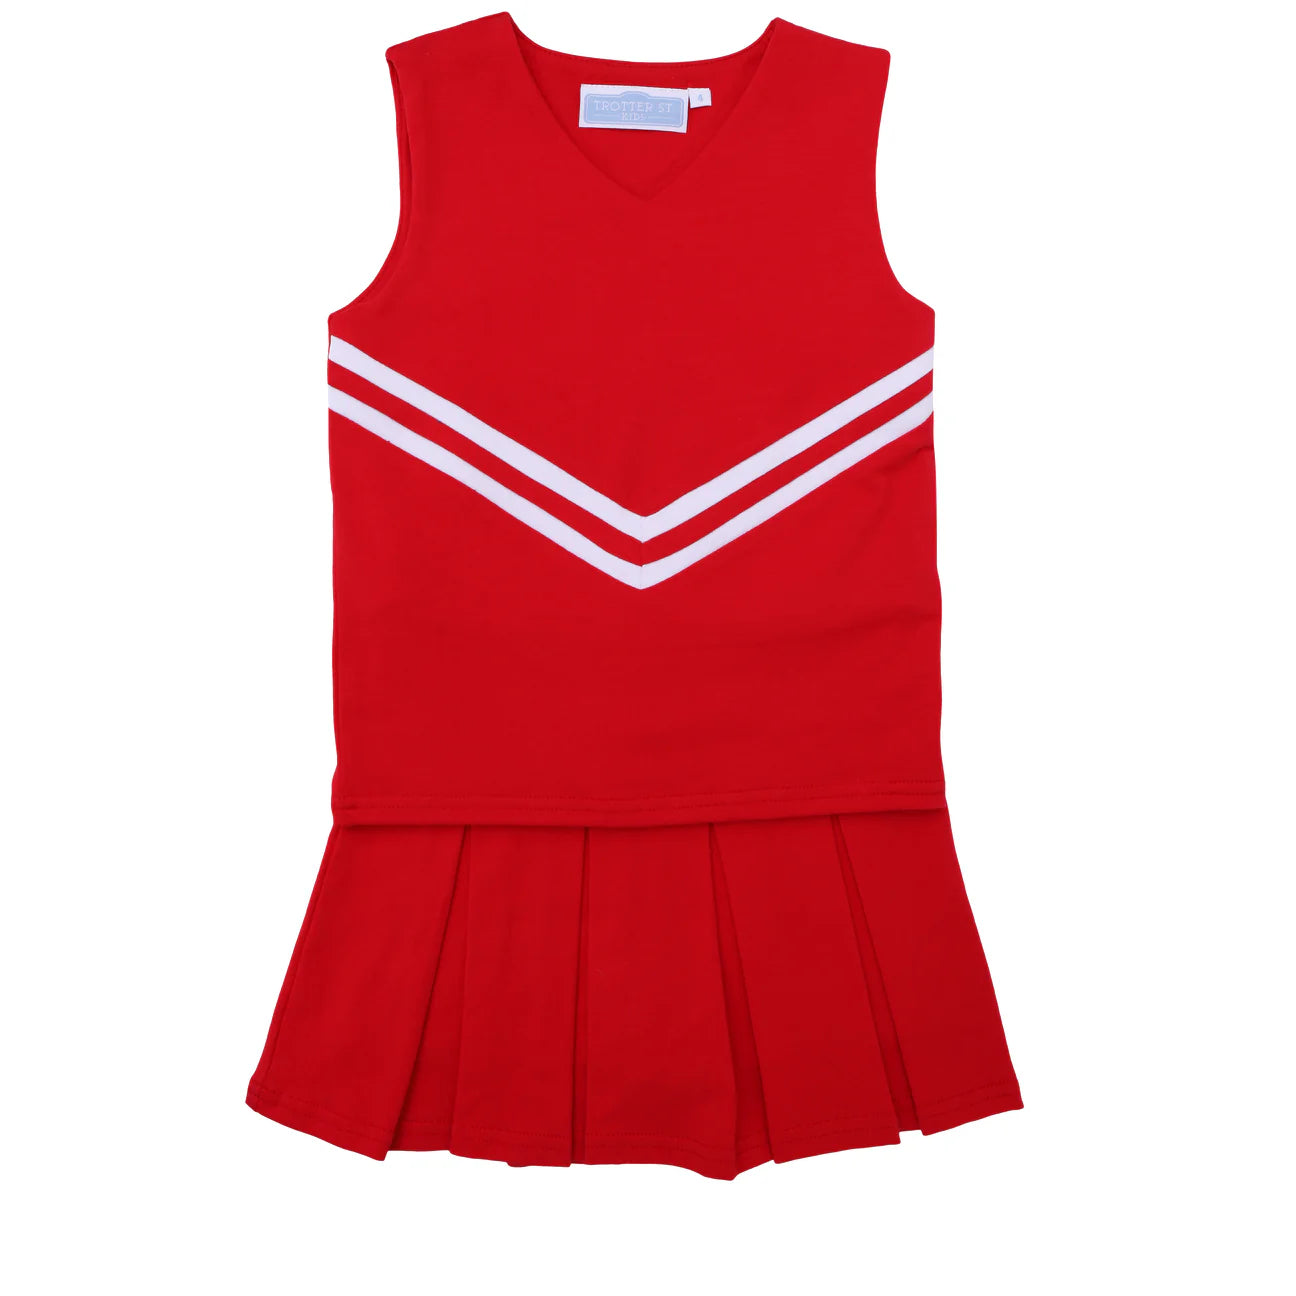 Trotter Street Kids - Cheer Uniform - Red